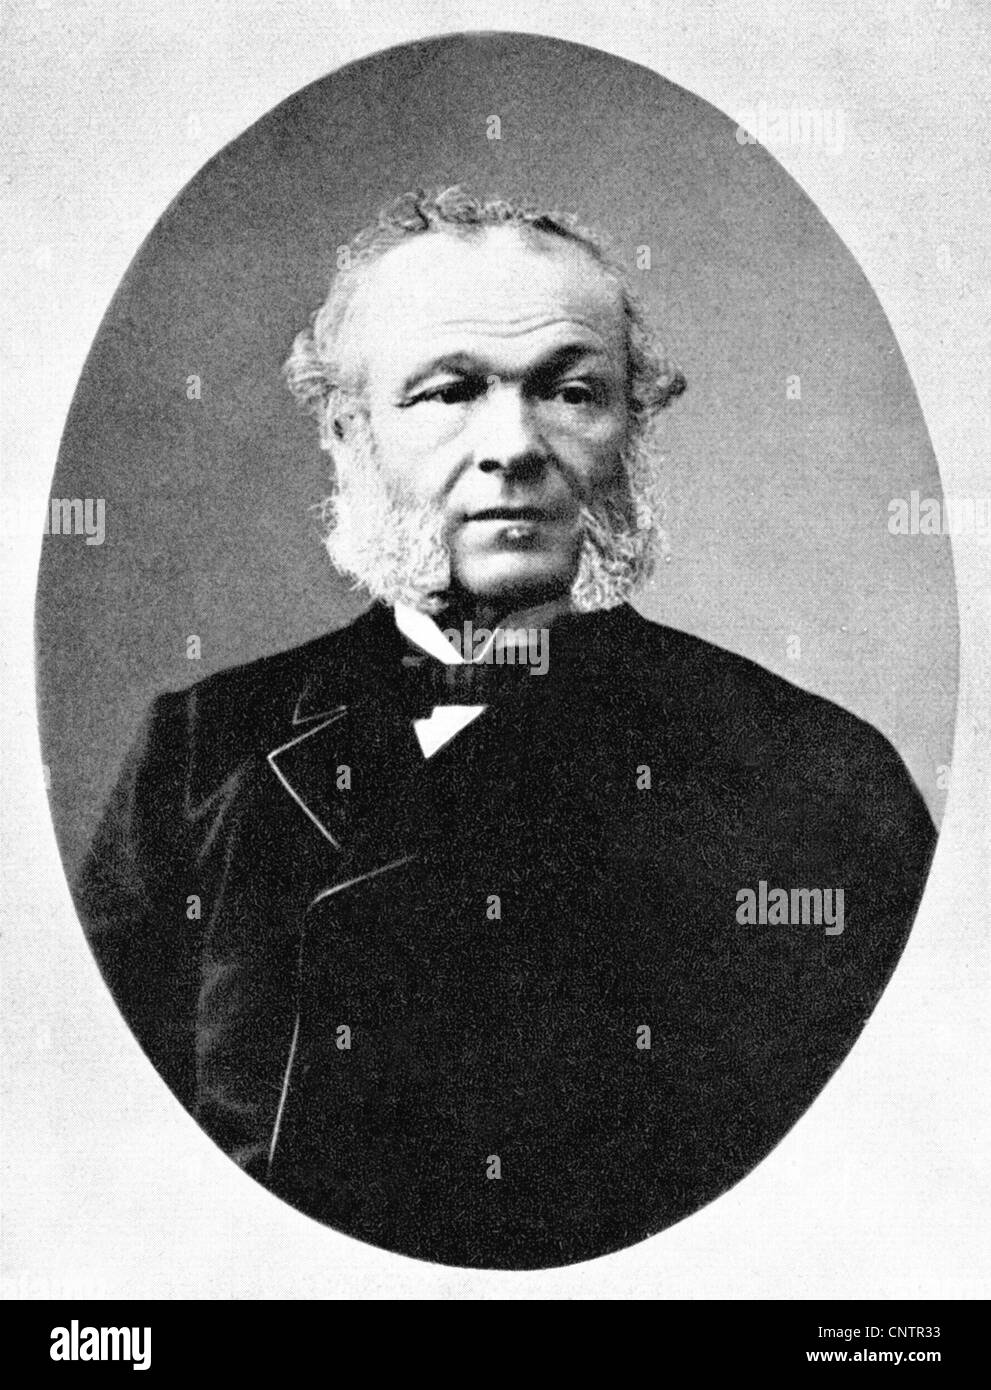 Wurtz, Charles Adolphe, 26.11.1817 - 12.5.1884, French chemist of German origin, portrait, photo, 19th century, Stock Photo